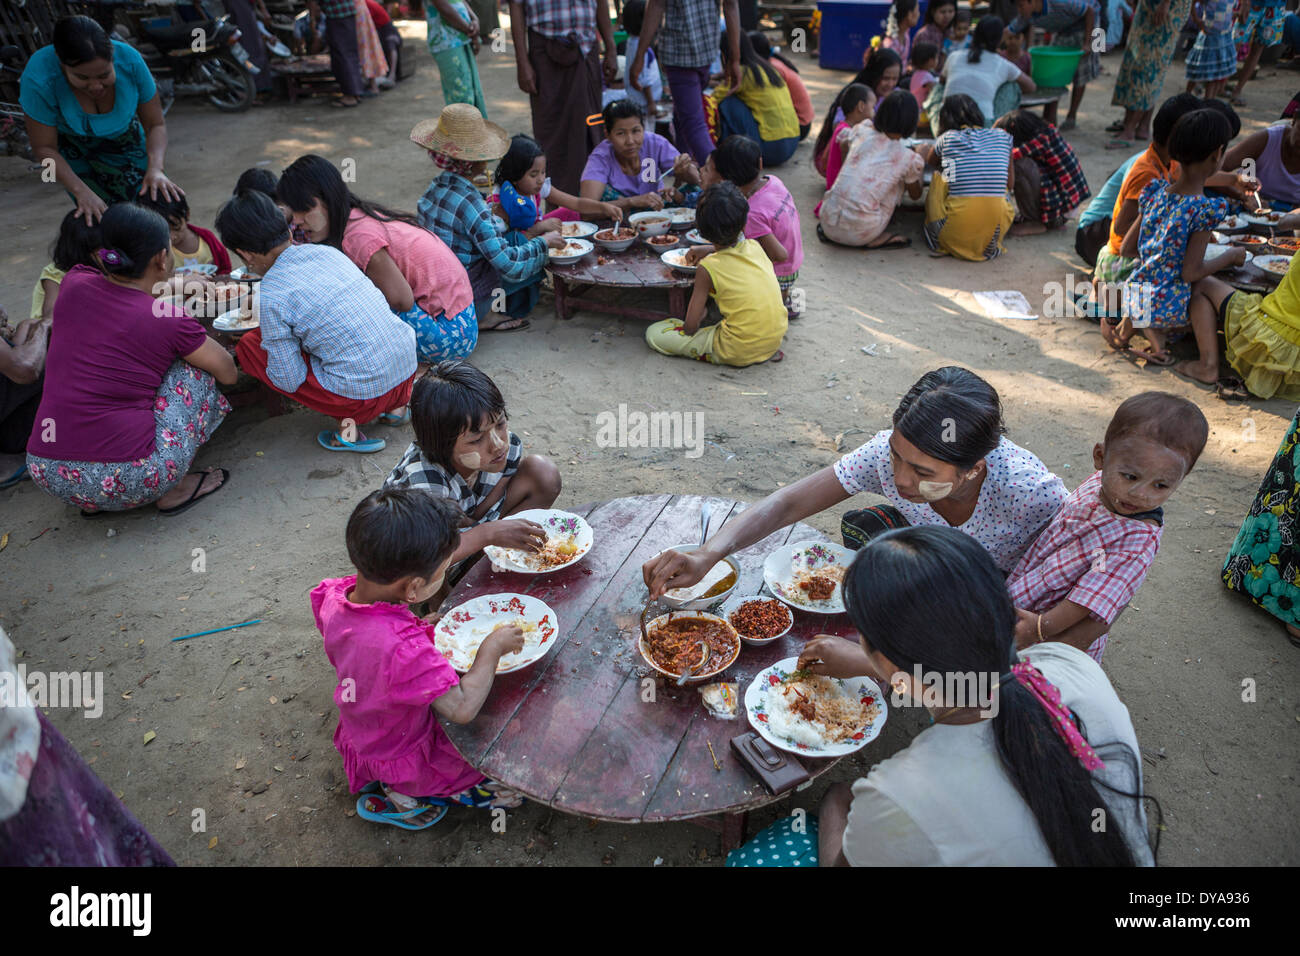 Mandalay Myanmar Burma Asien Sagaing Feier bunte Kultur Familie Essen Fiesta Essen kostenlos Homosexuell Armen Wiedersehen t Stockfoto